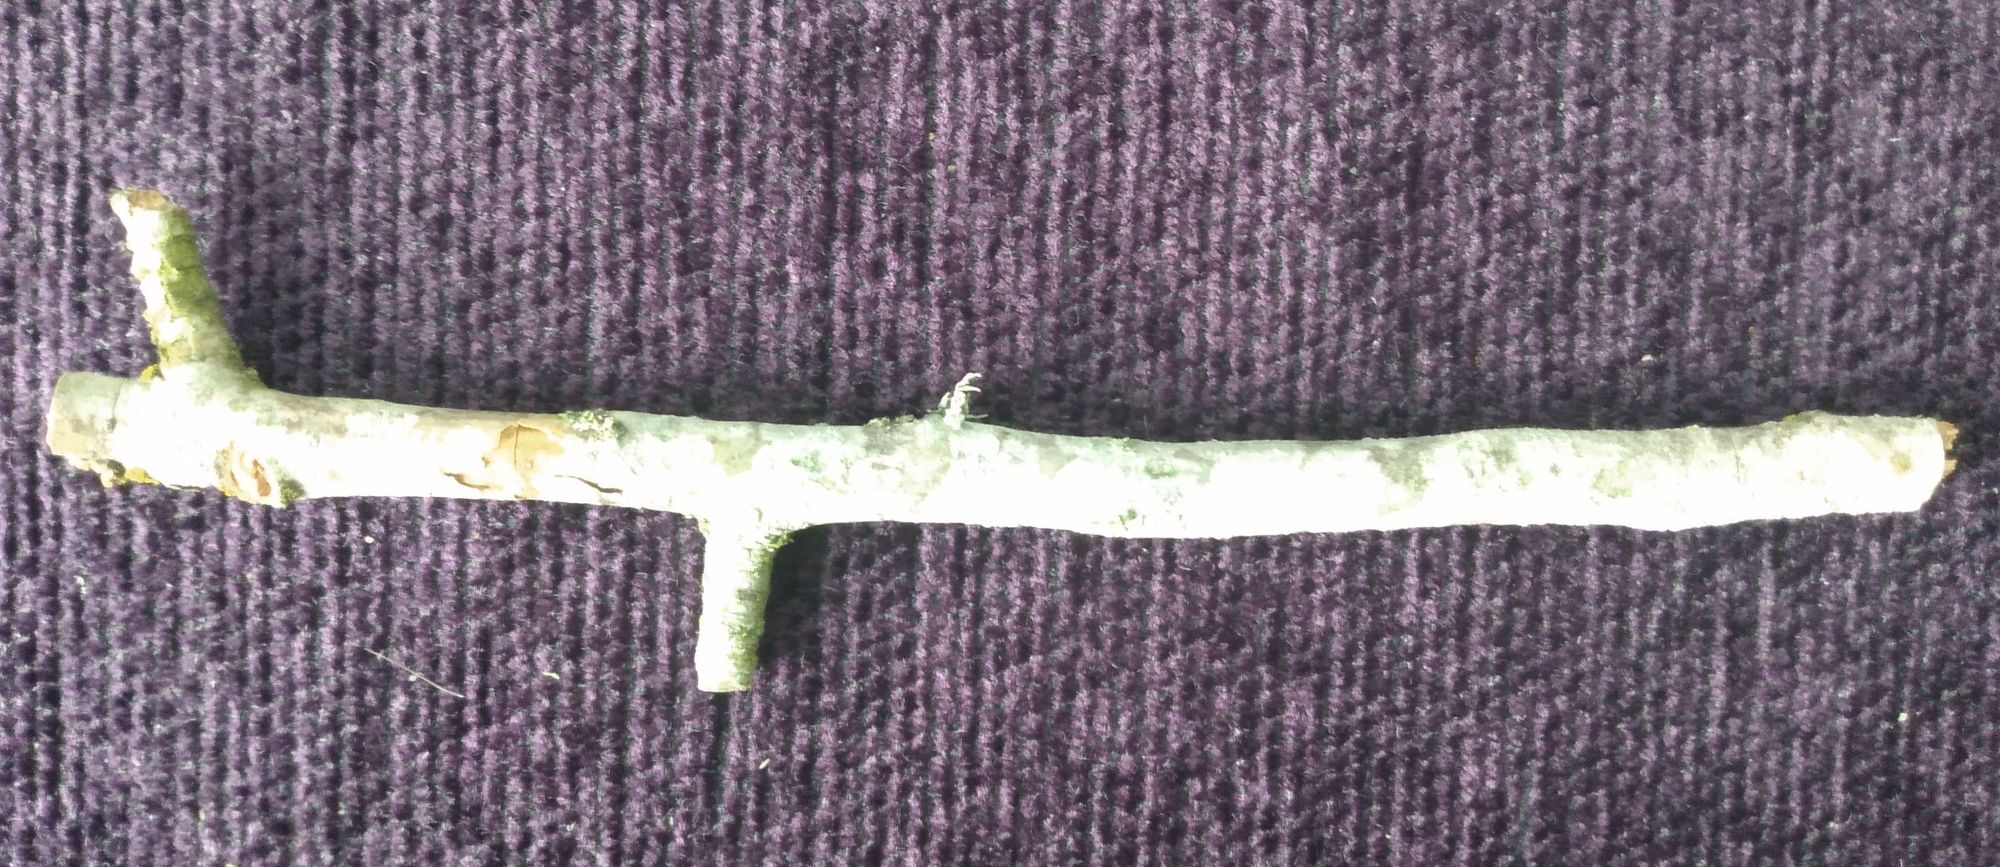 twig shaped like the Tokemak logo